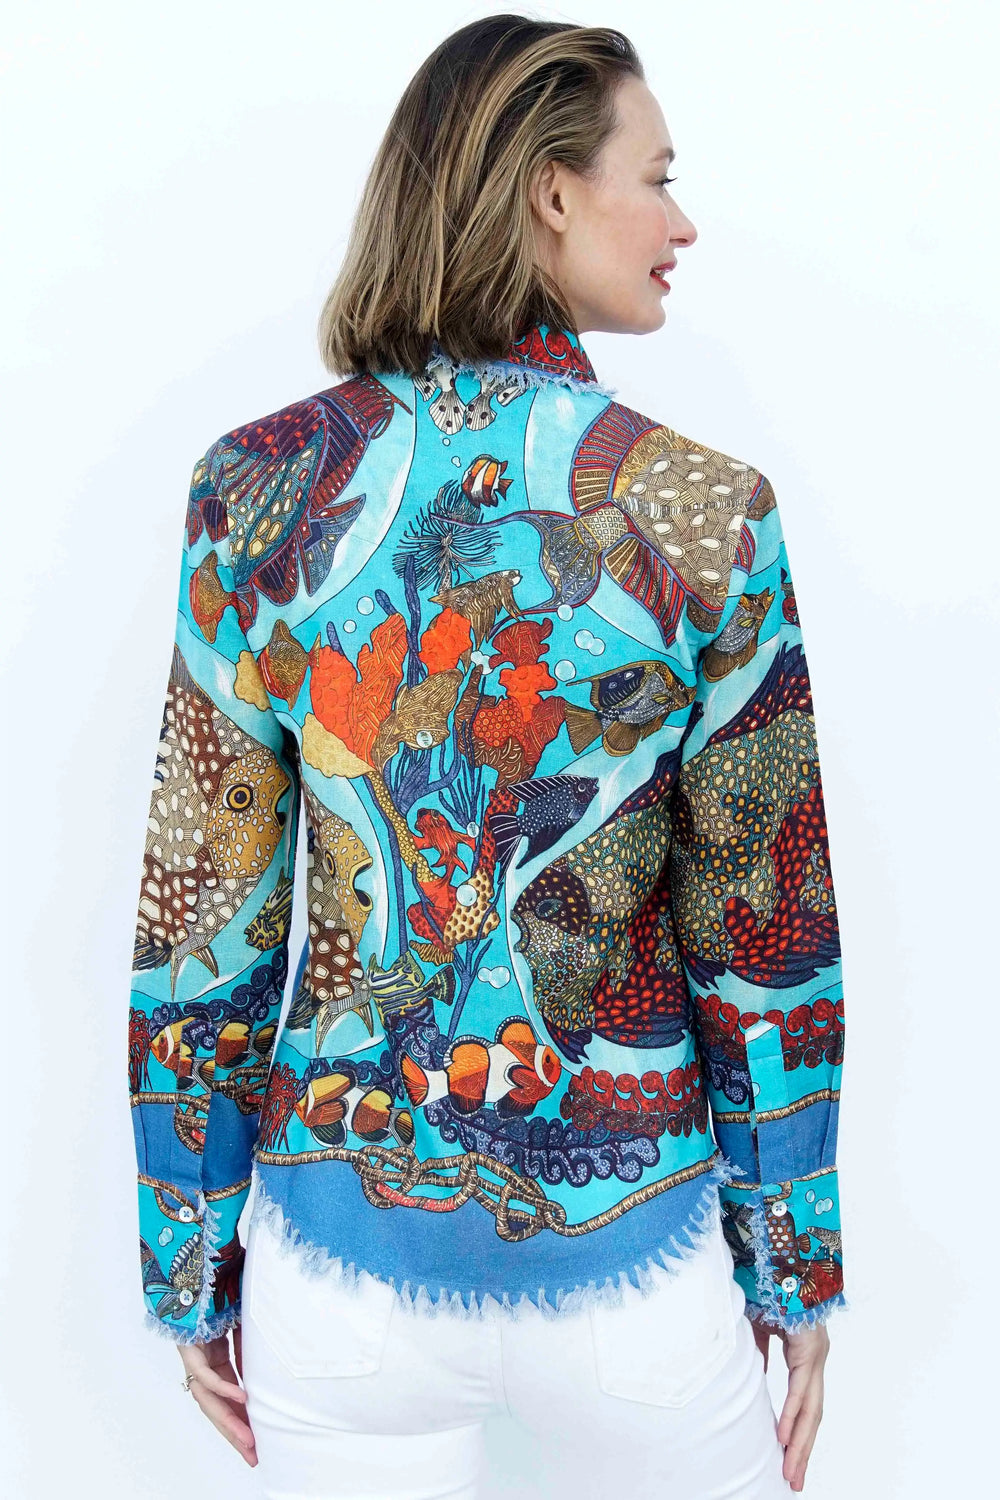 Dizzy-Lizzie Cape Cod Shirt With Aquarium Print